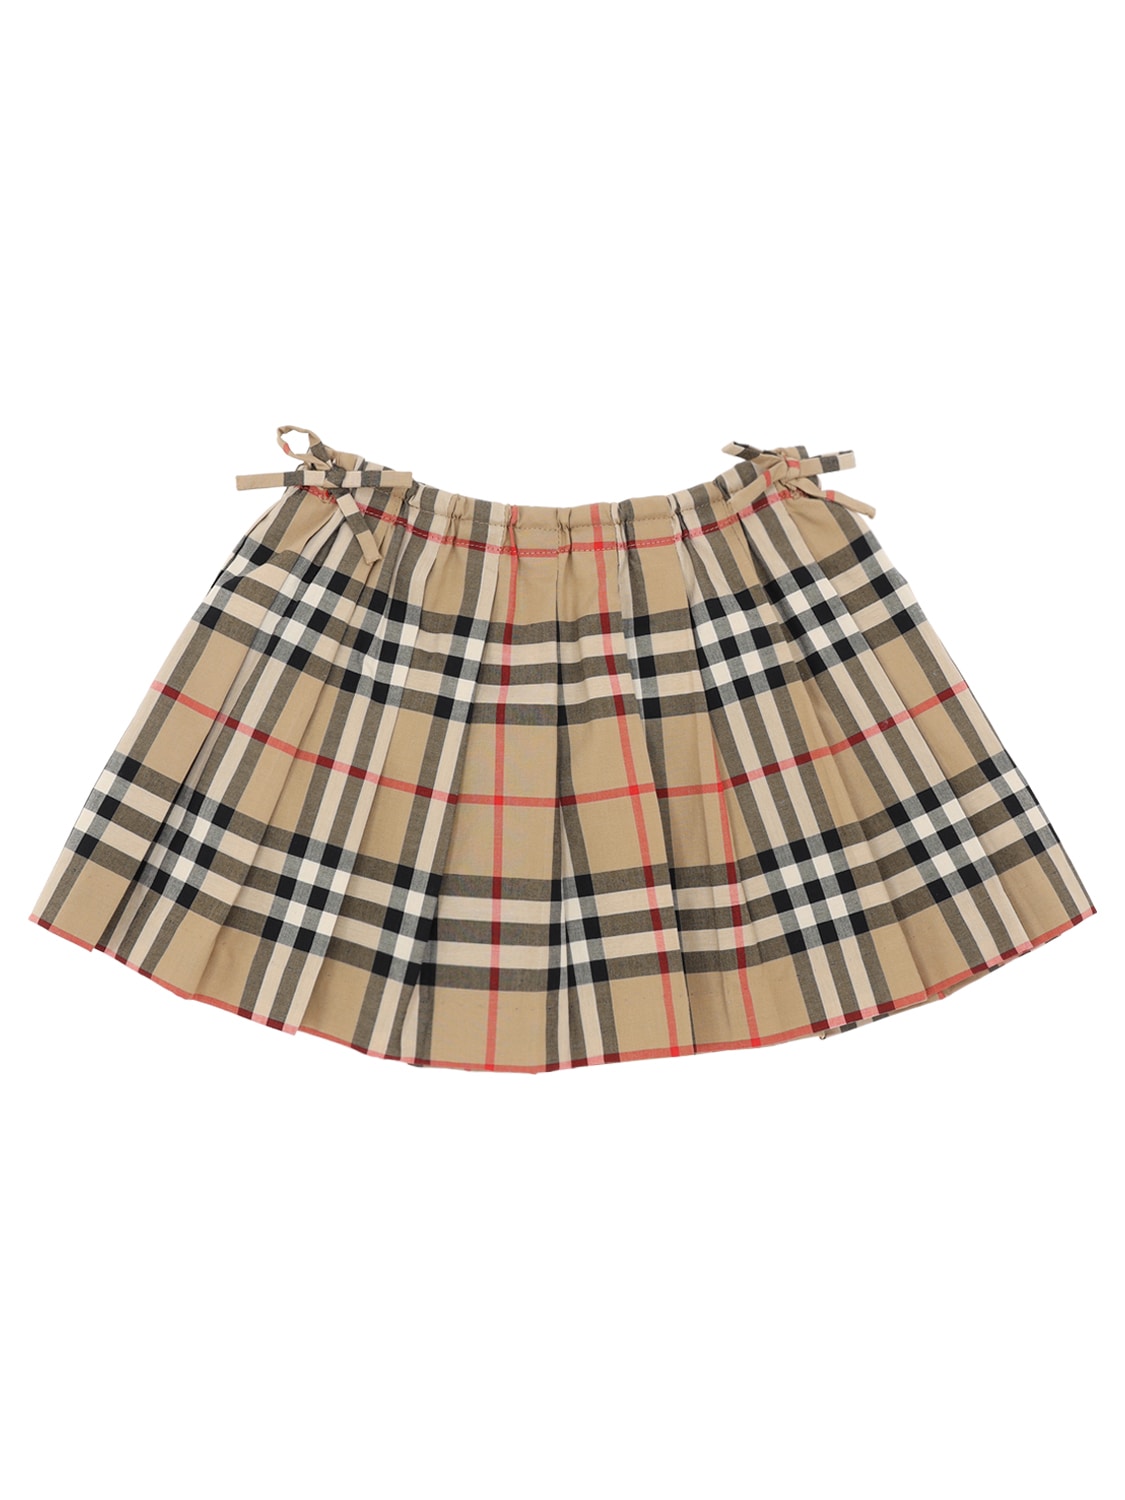 pleated burberry skirt